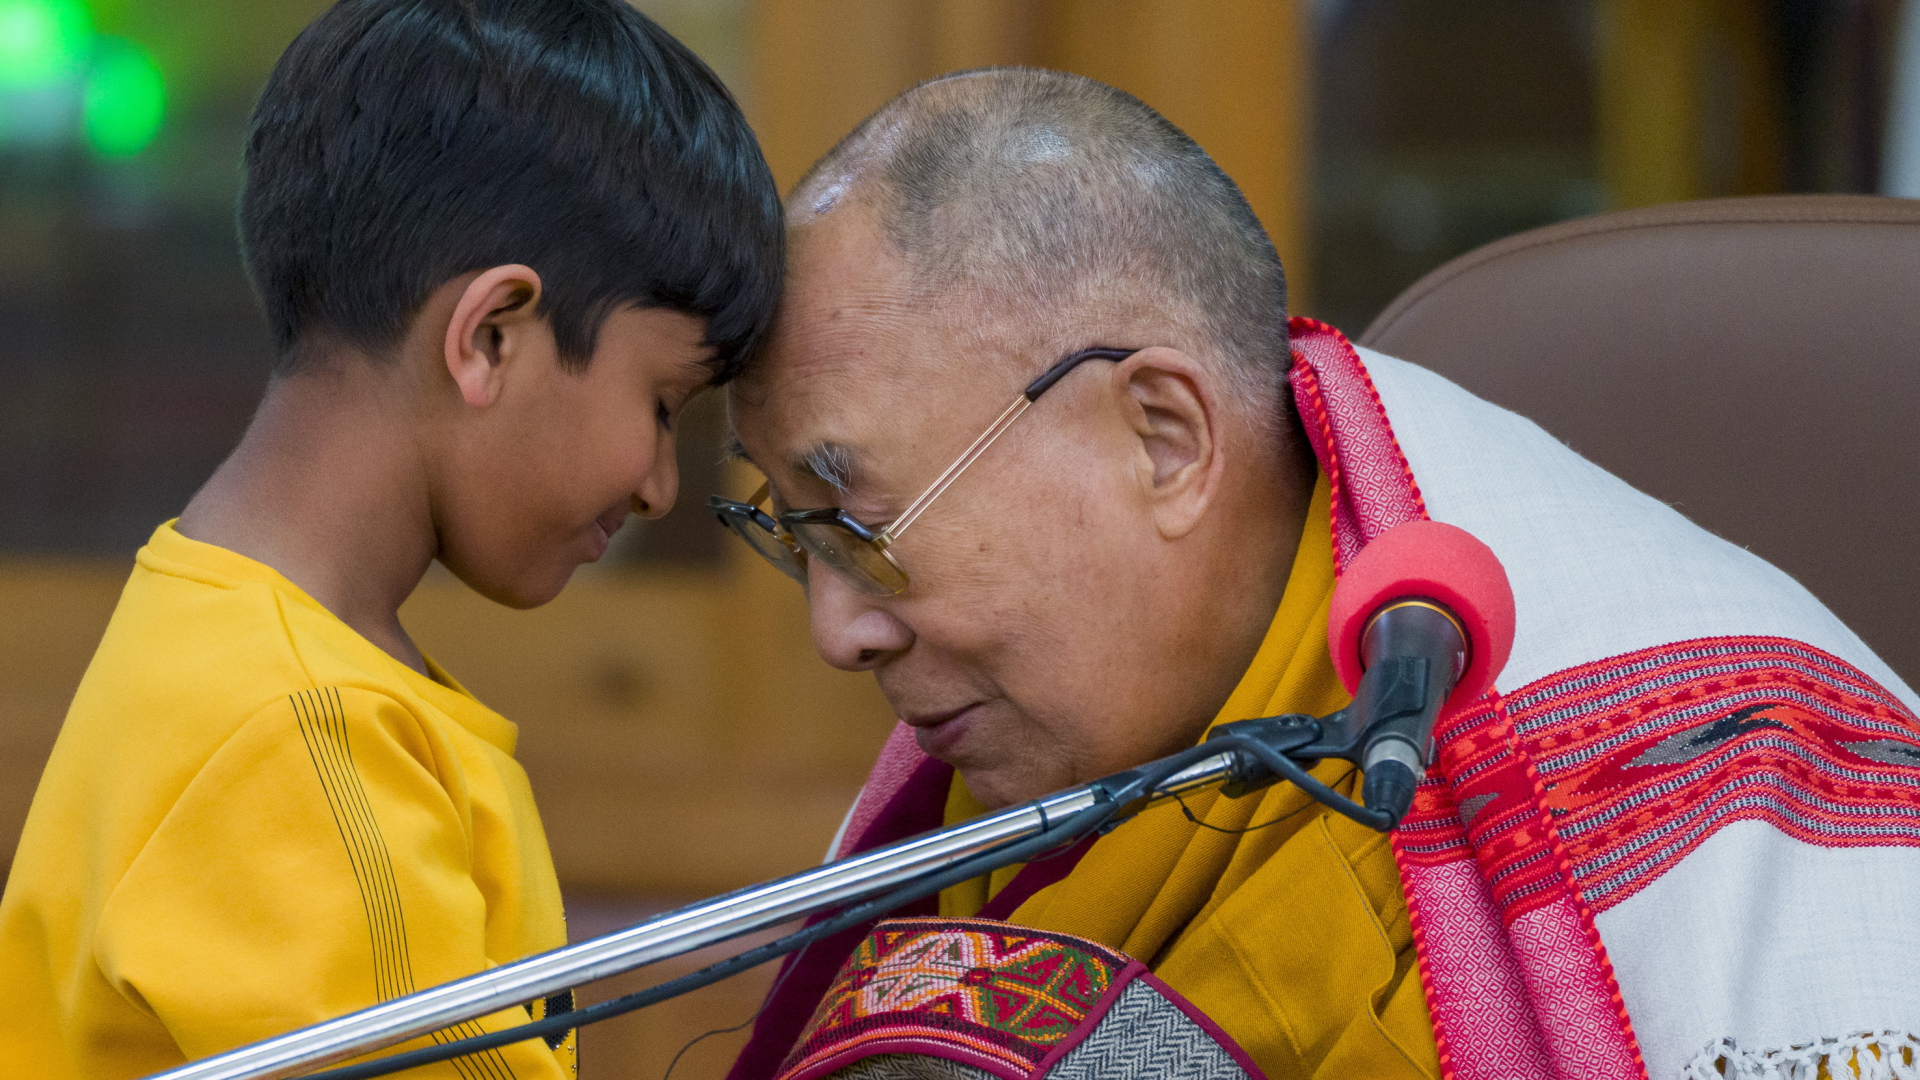 Nach viralem Video: Dalai Lama entschuldigt sich bei Jungen